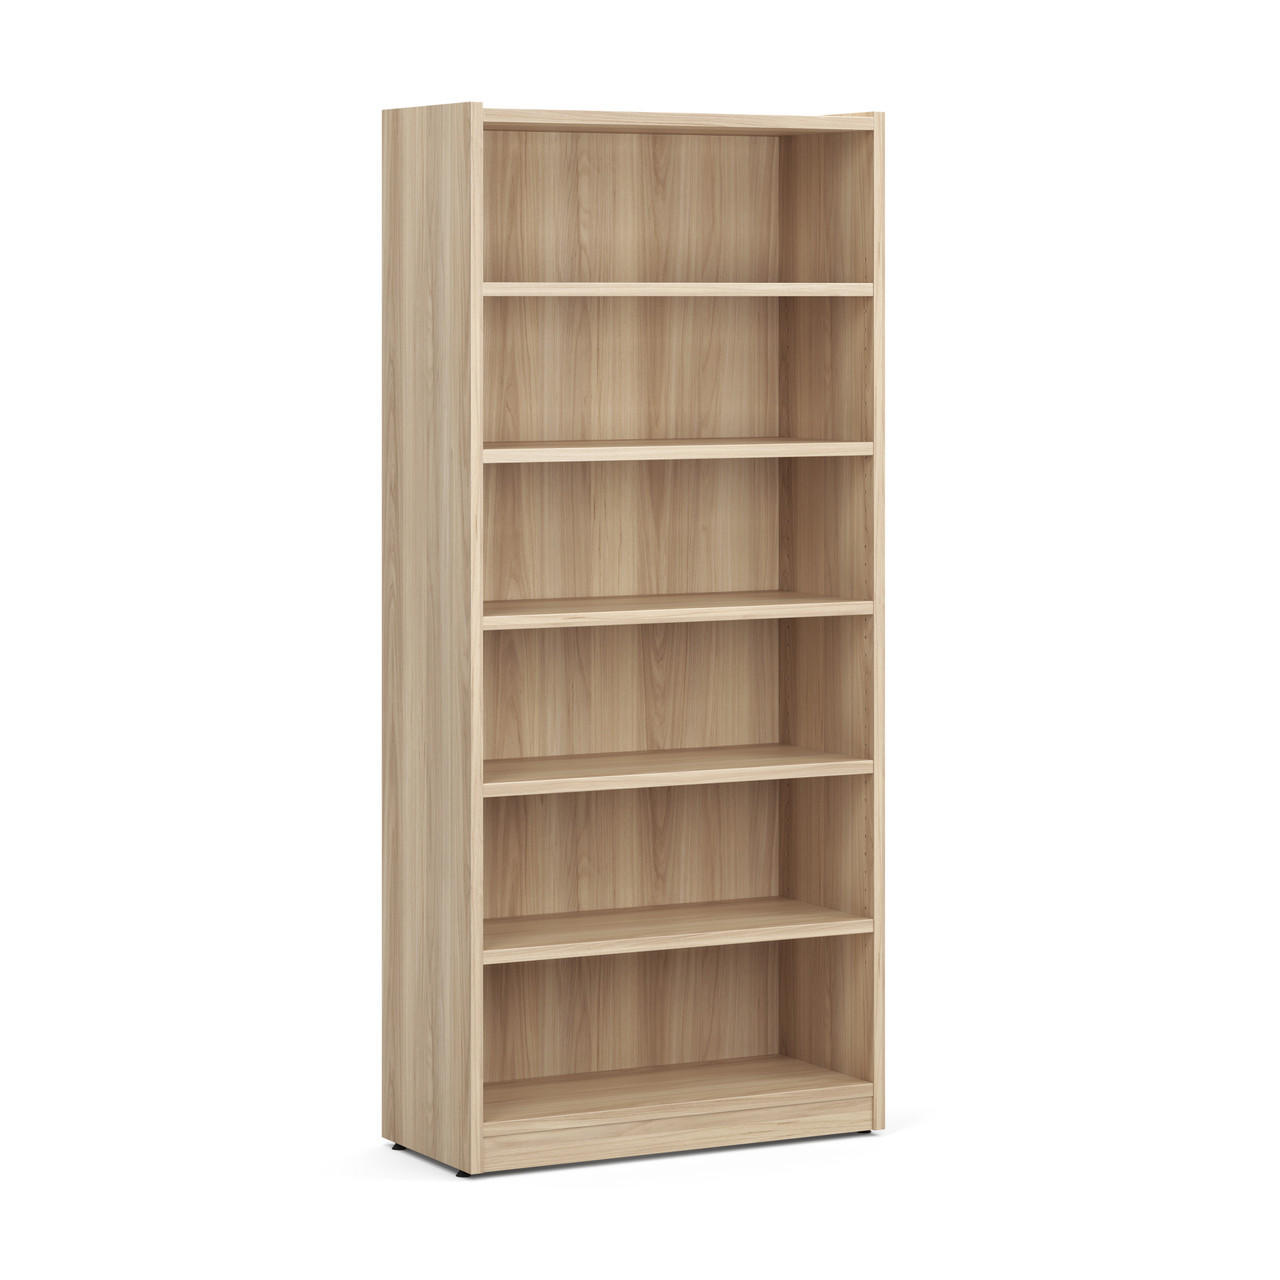  Office Source OS Laminate 6 Shelf Bookcase PL156 